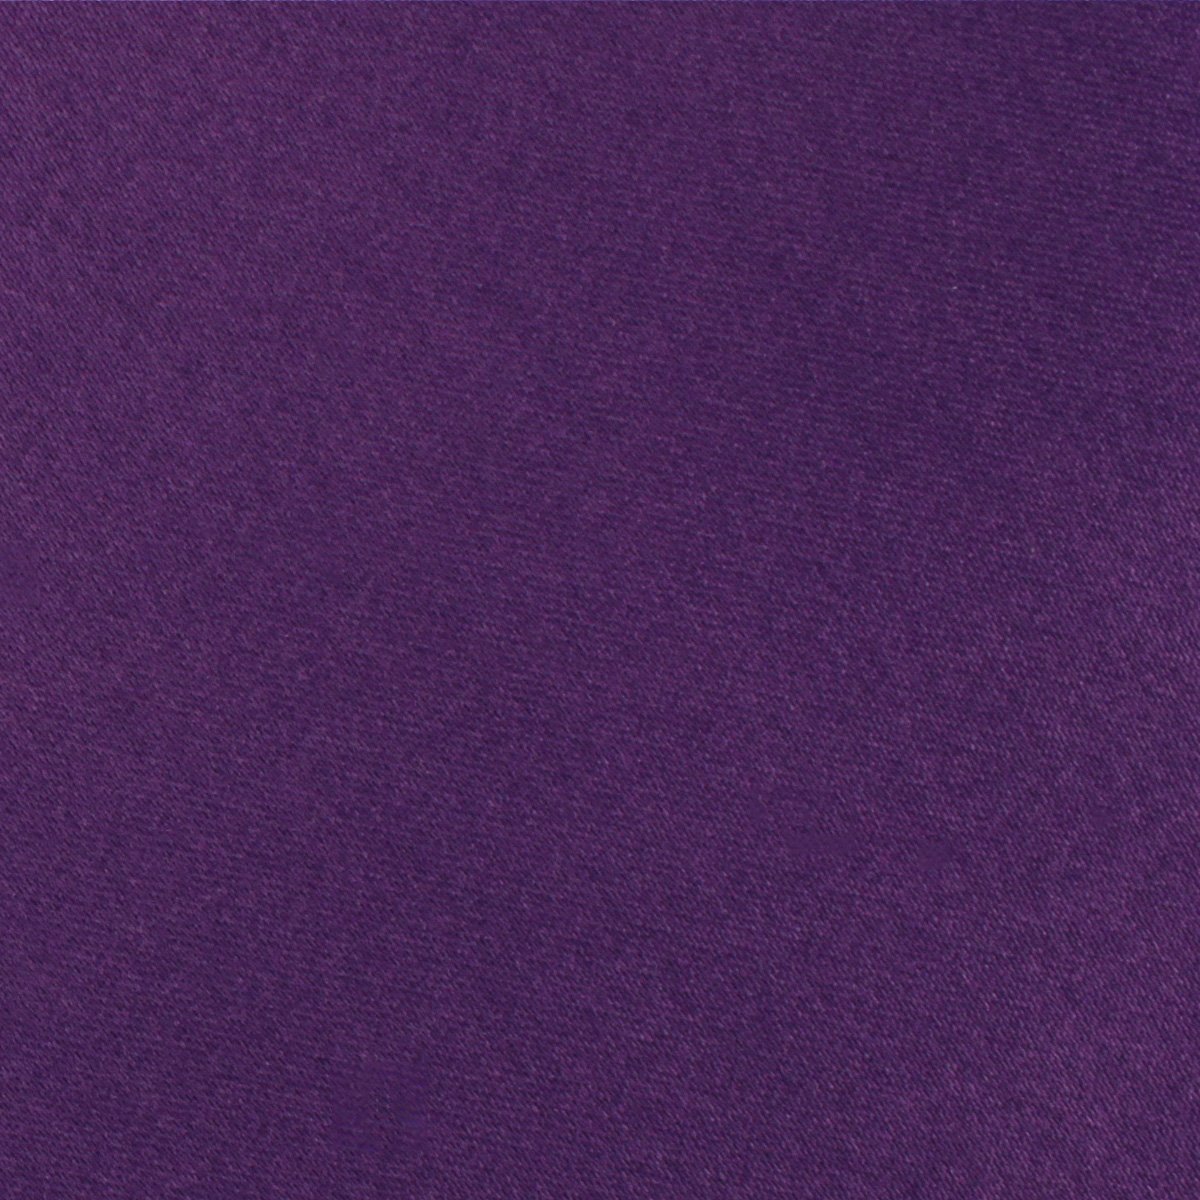 Eggplant Purple Satin Skinny Tie Fabric